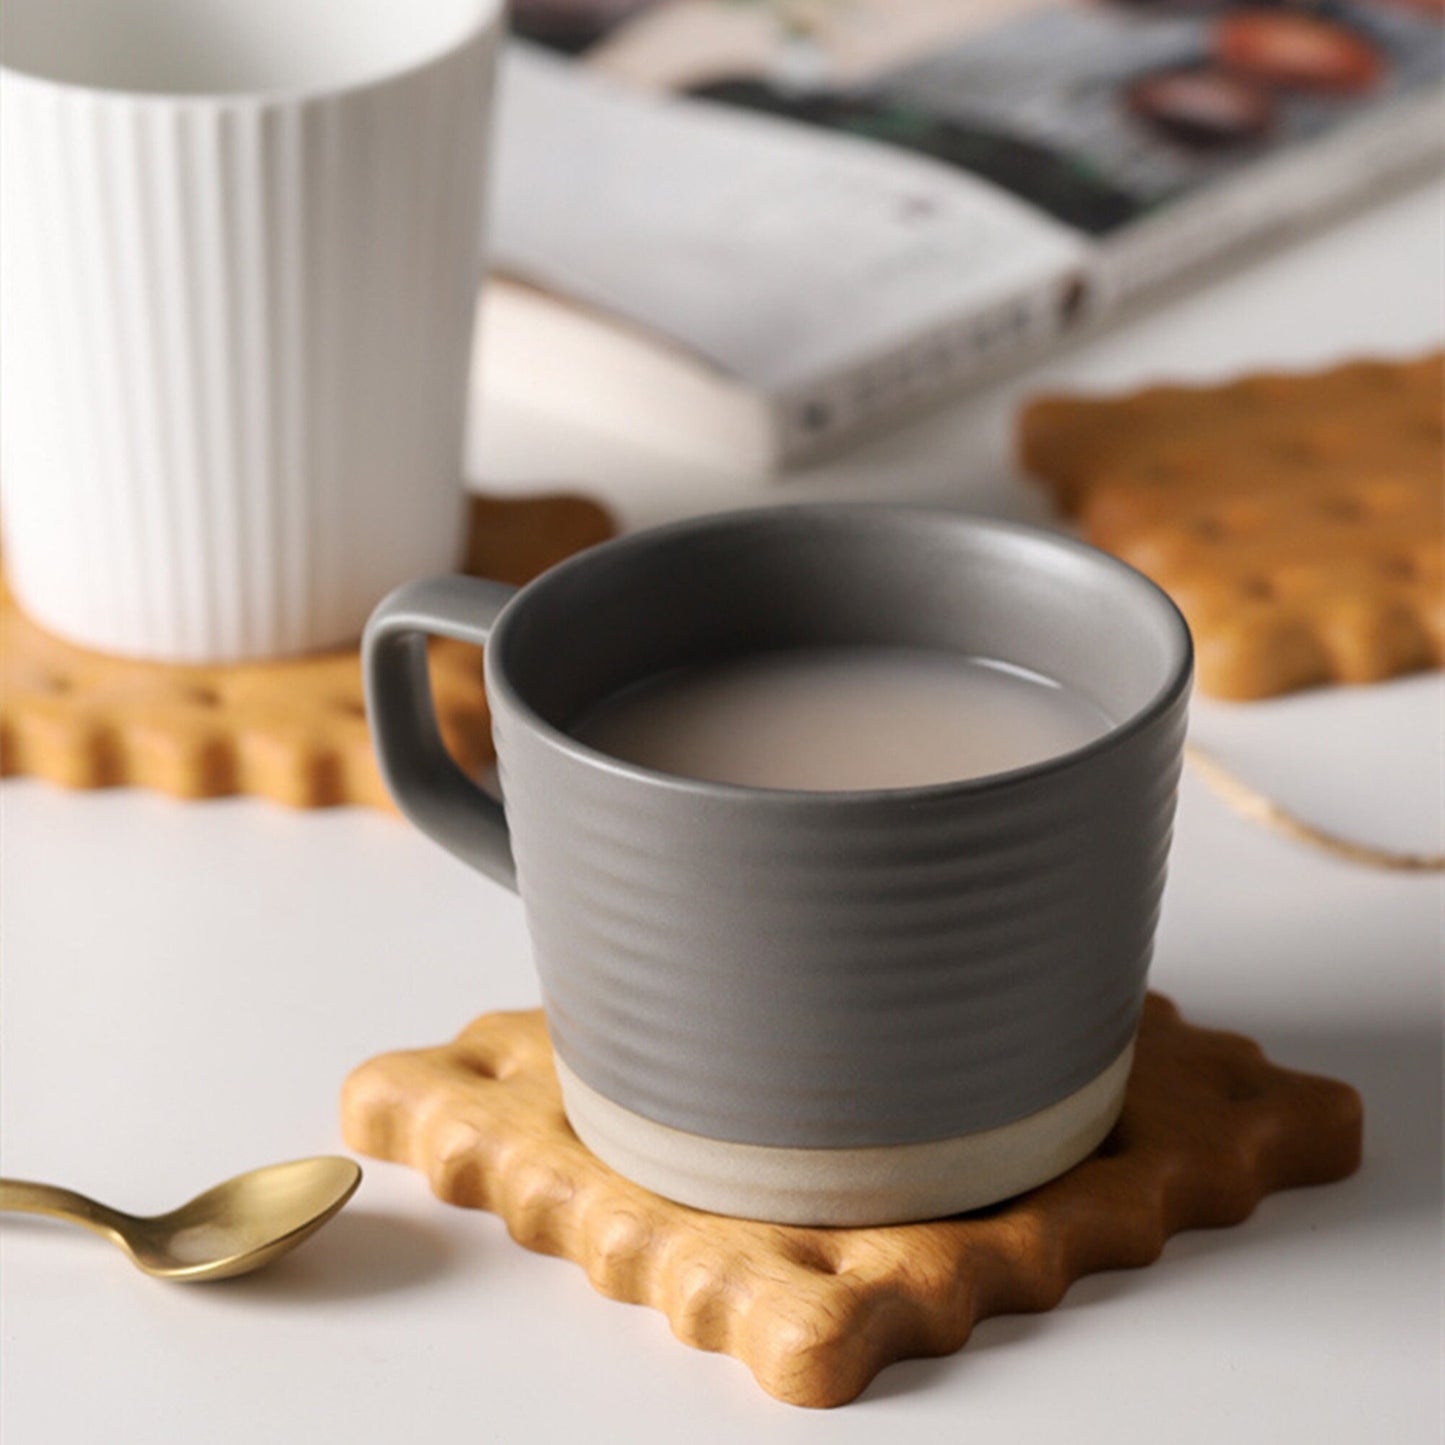 Handmade Solid Wood Coasters- Set of 4  Walnut Cup Coasters -  Abstract Art Coasters,Wood Biscuit Cup Mat-Christmas gift, Housewarming Gift